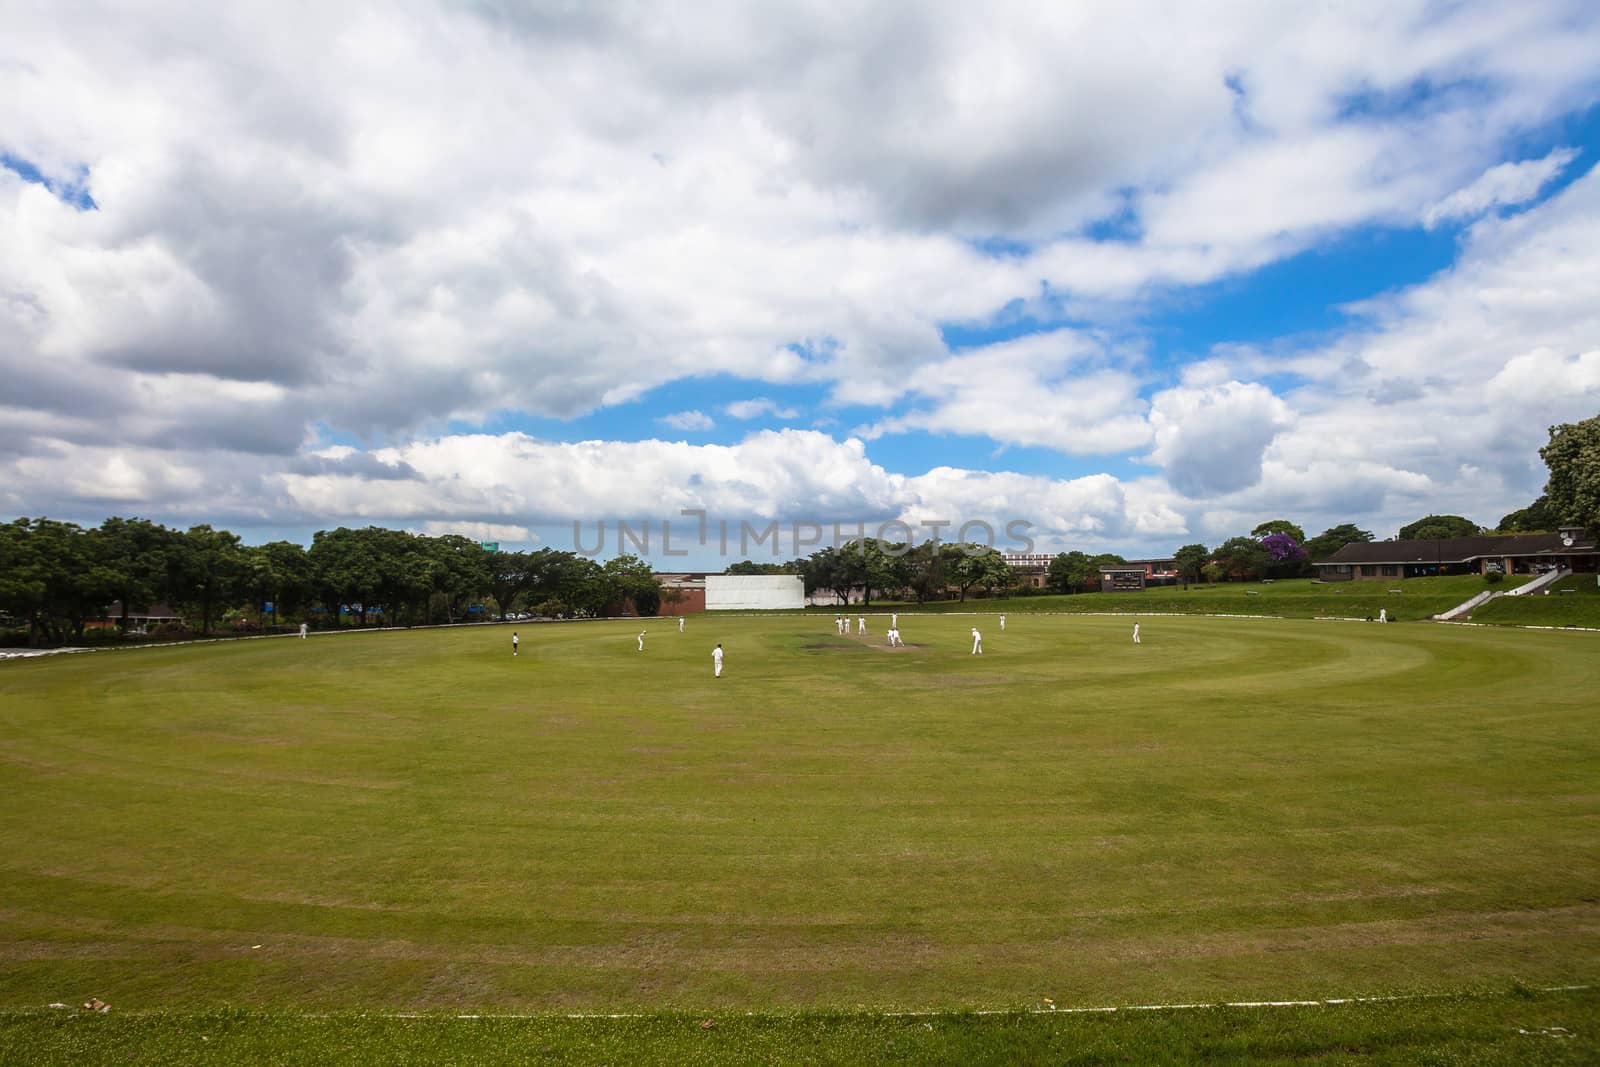 Cricket Players Oval Field by ChrisVanLennepPhoto